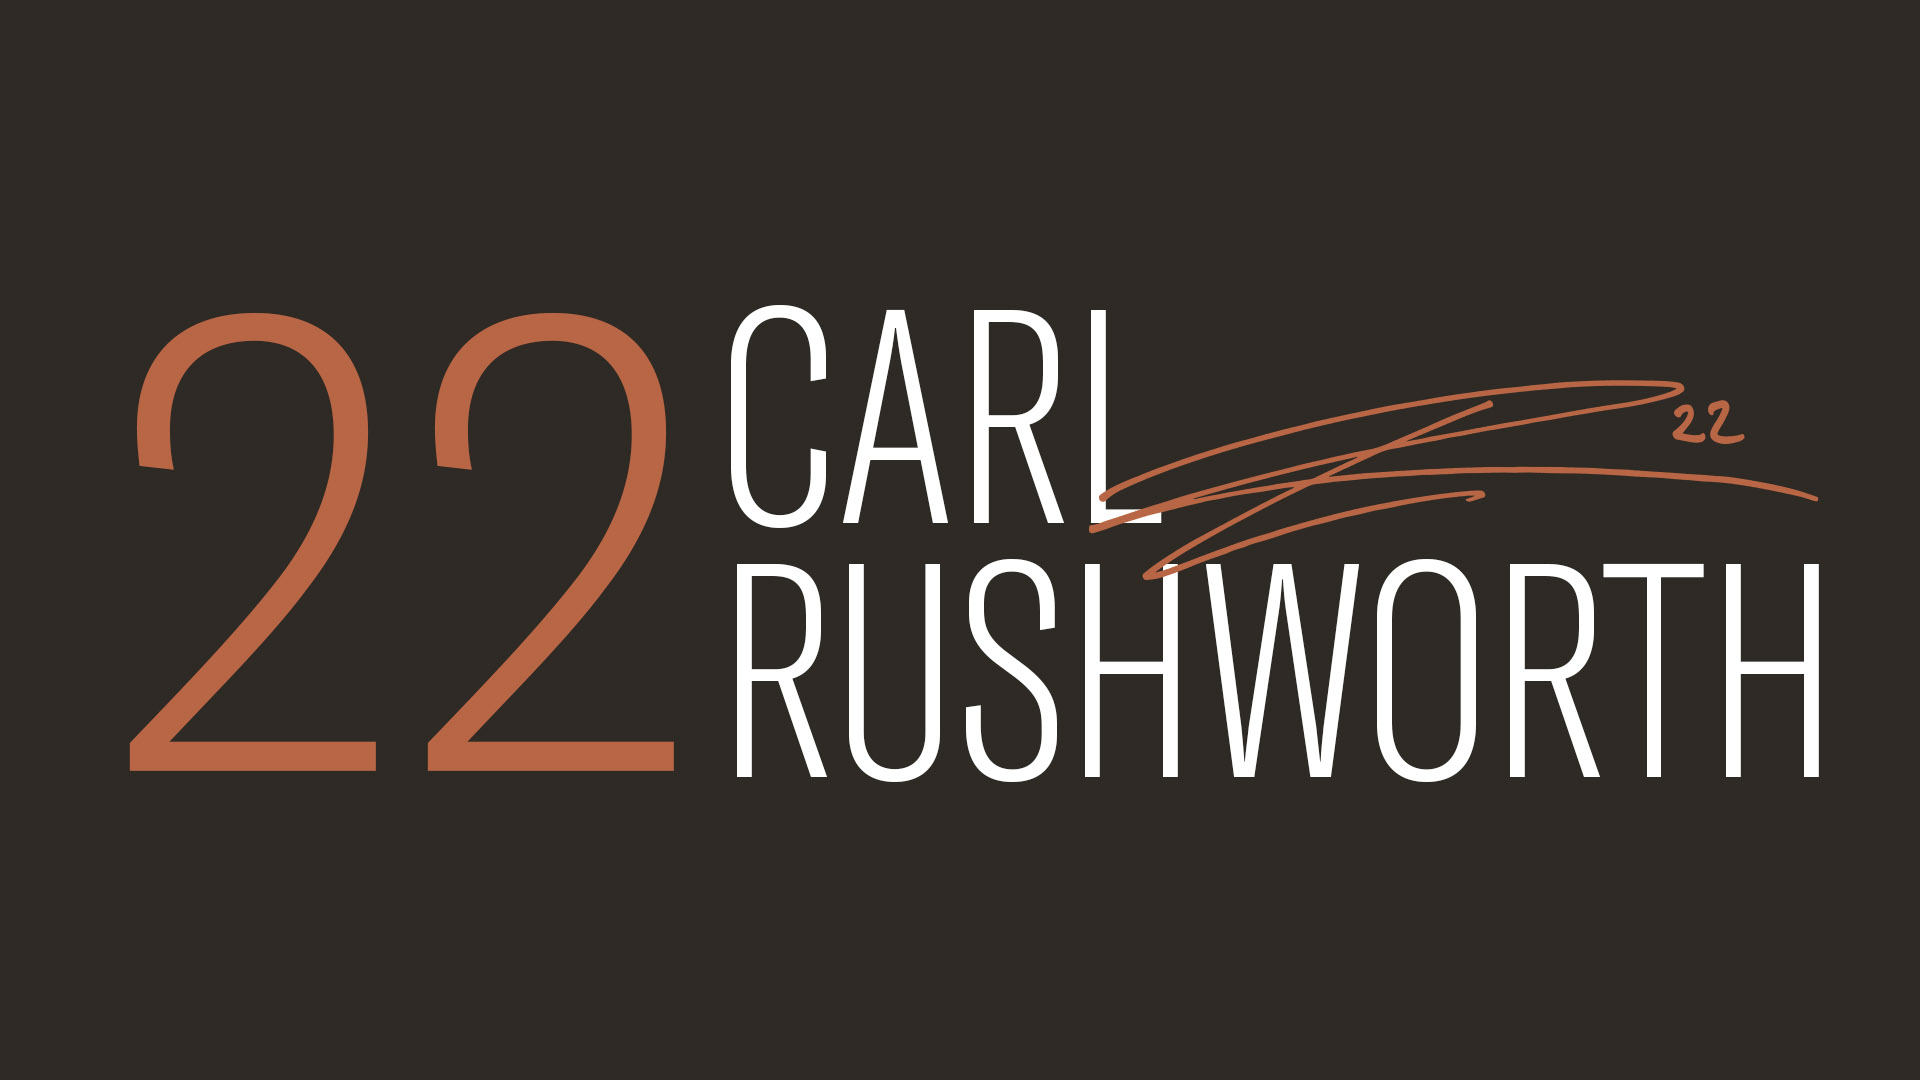 22 - Carl Rushworth